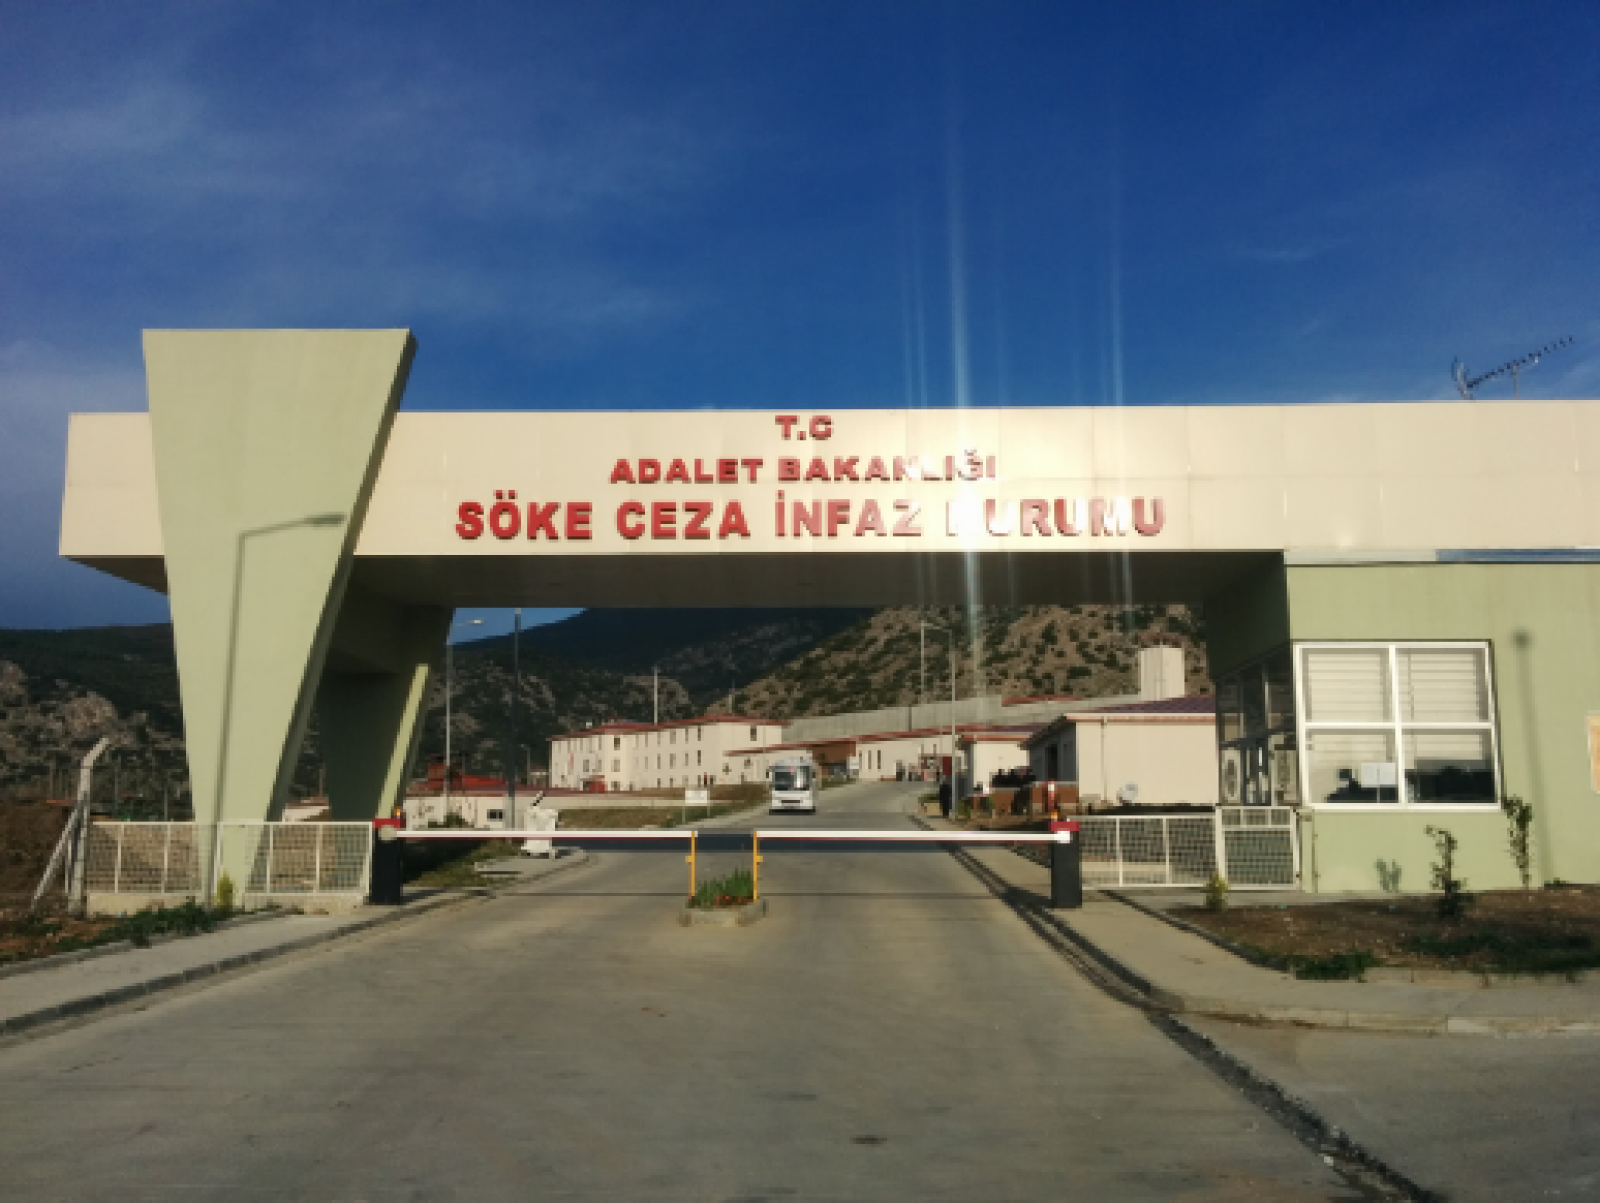 Aydın Prison